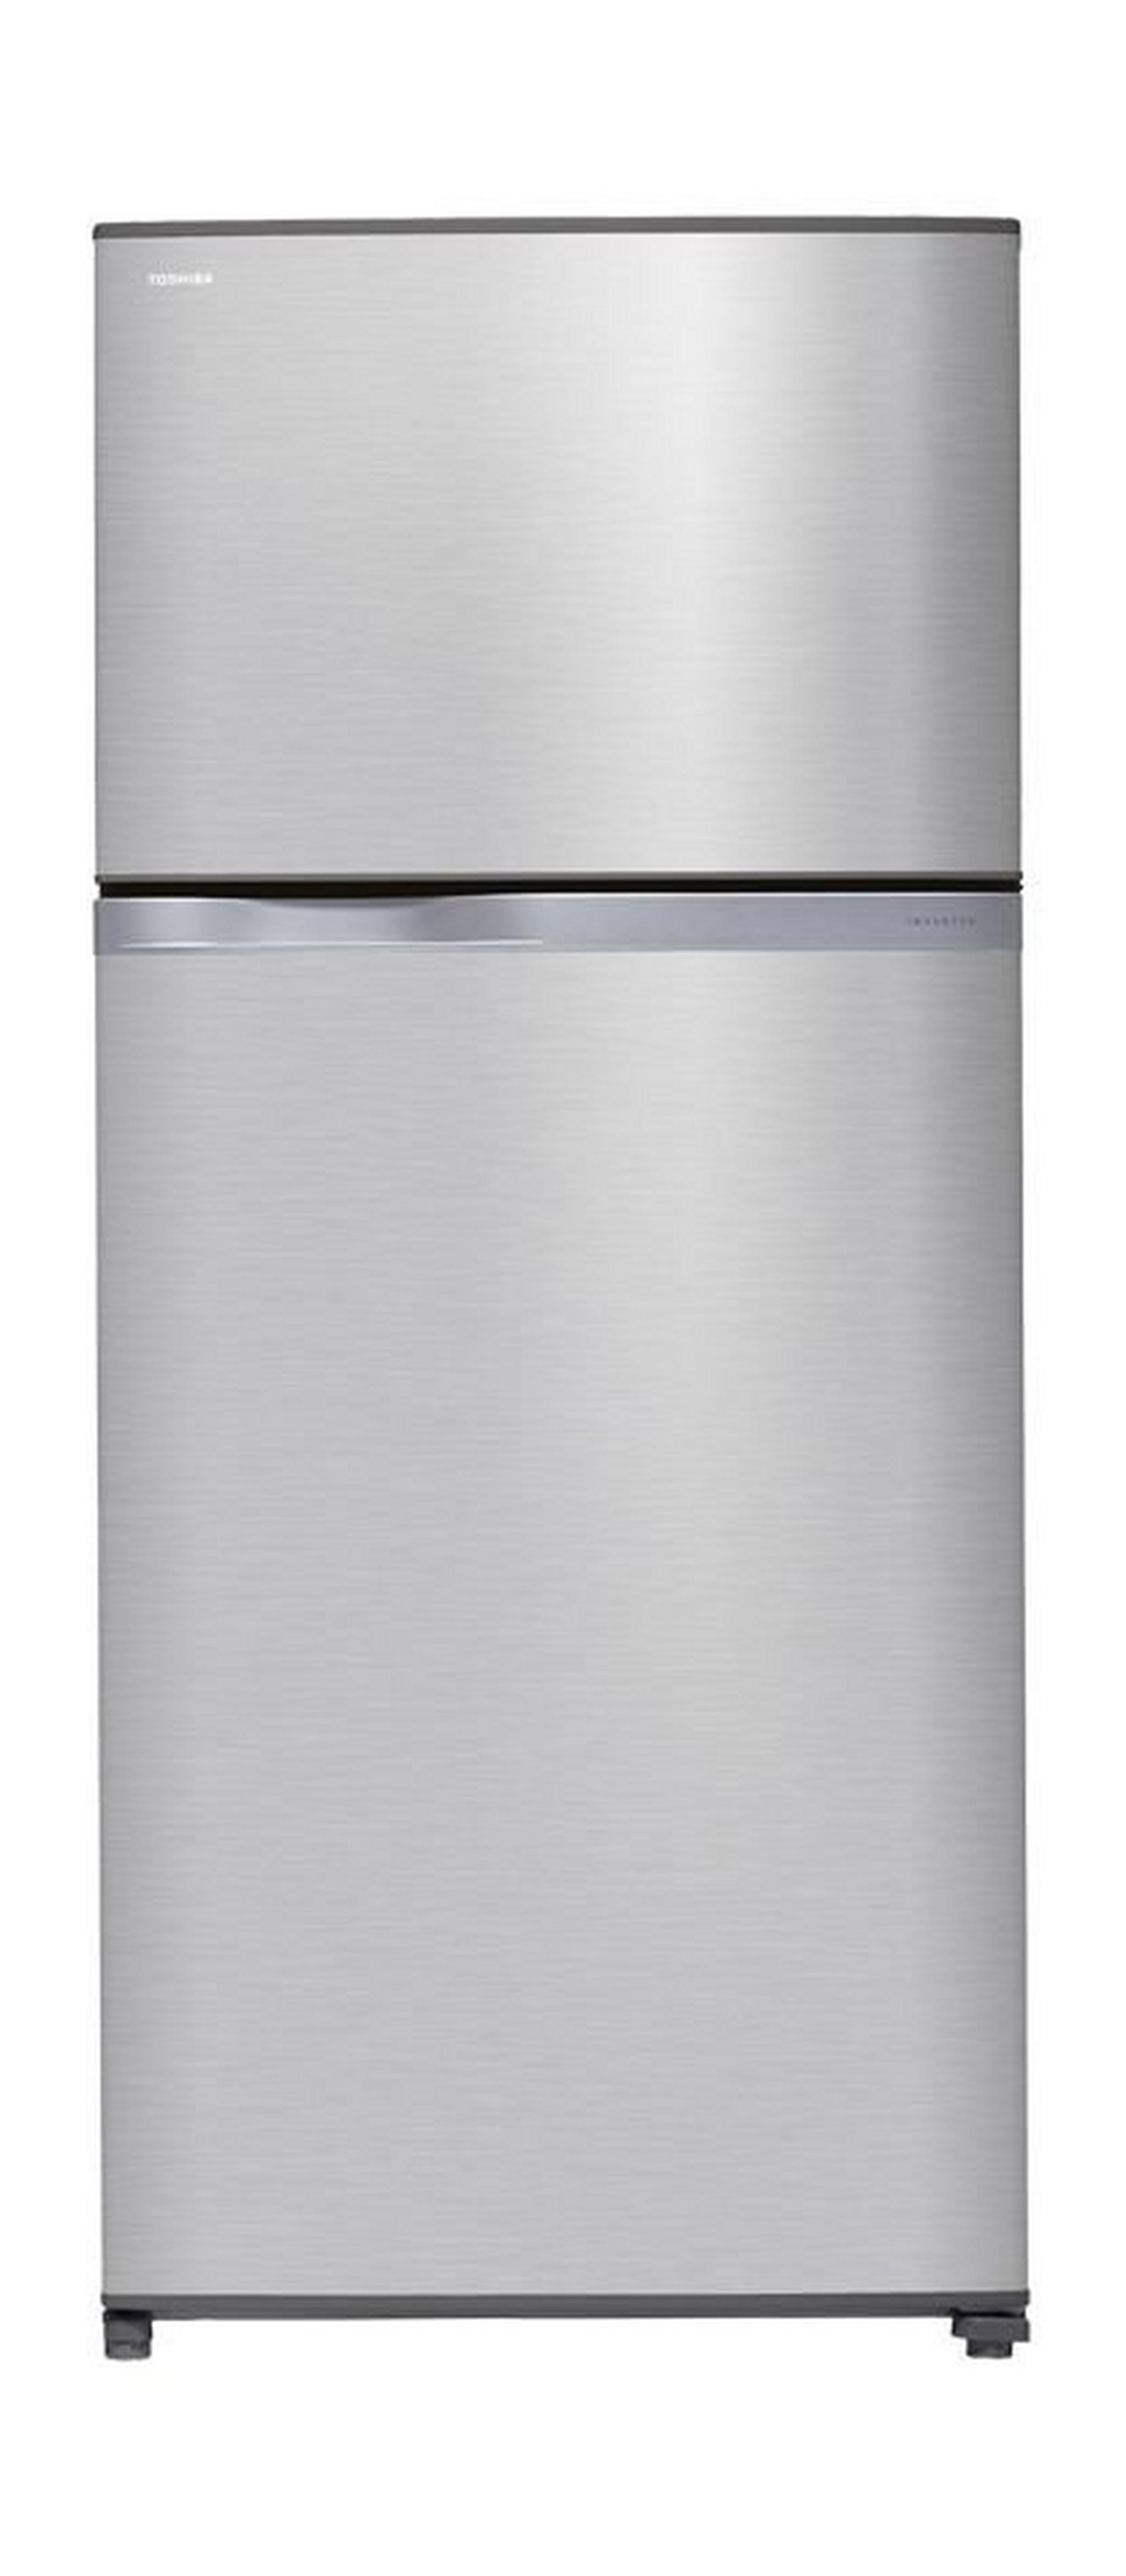 Toshiba 20 Cubic Feet Top Mount Refrigerator - Silver (GR-W69ATEZ(S)